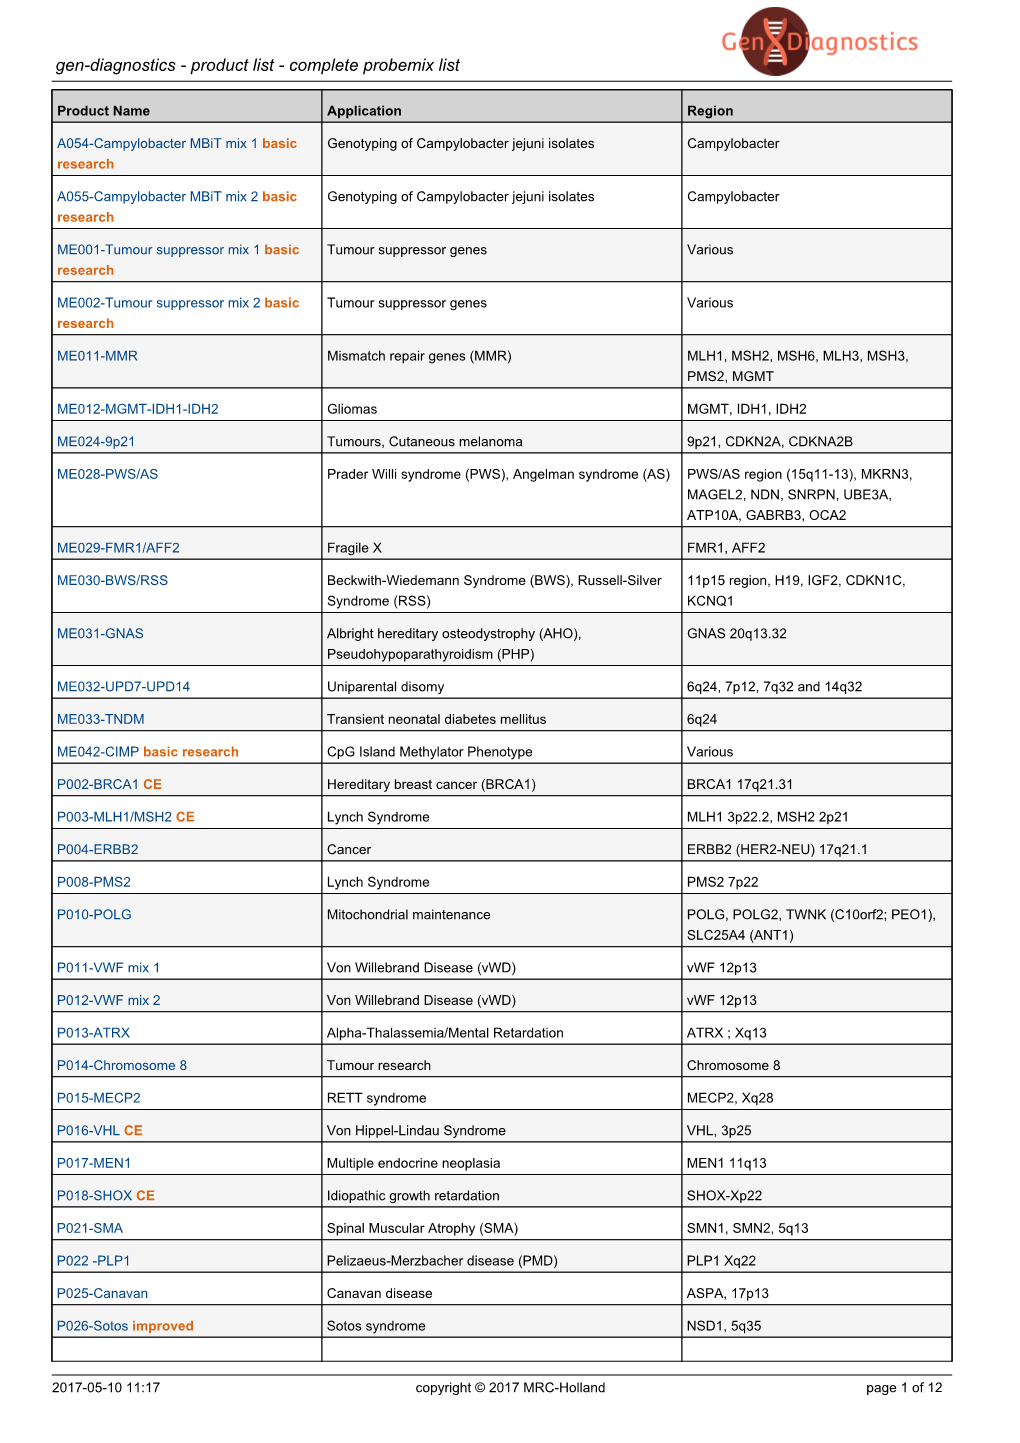 Product List - Complete Probemix List